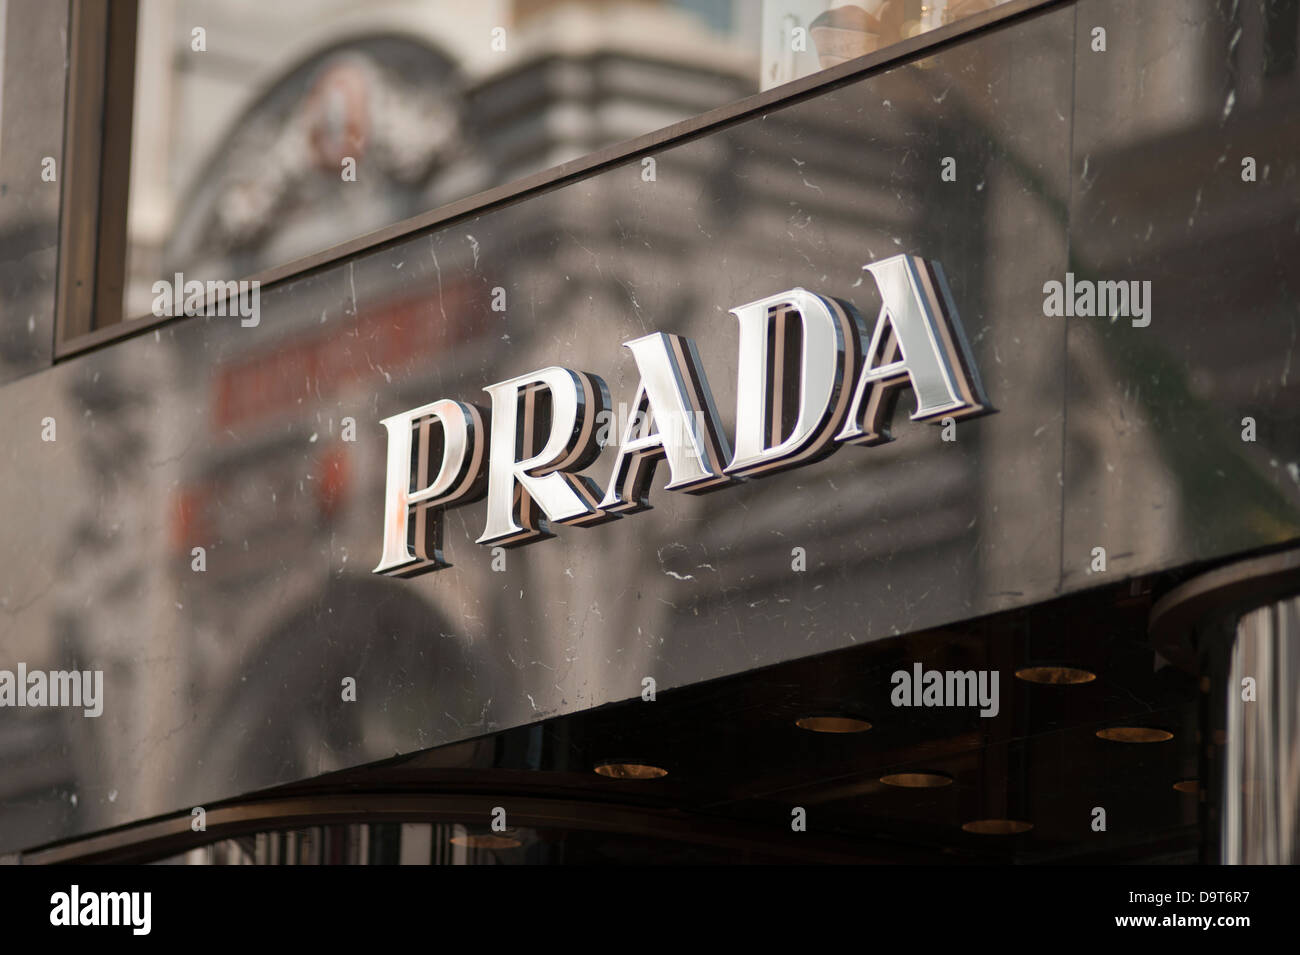 Prada fashion shop logo in Old Bond Street, London W1 Foto Stock